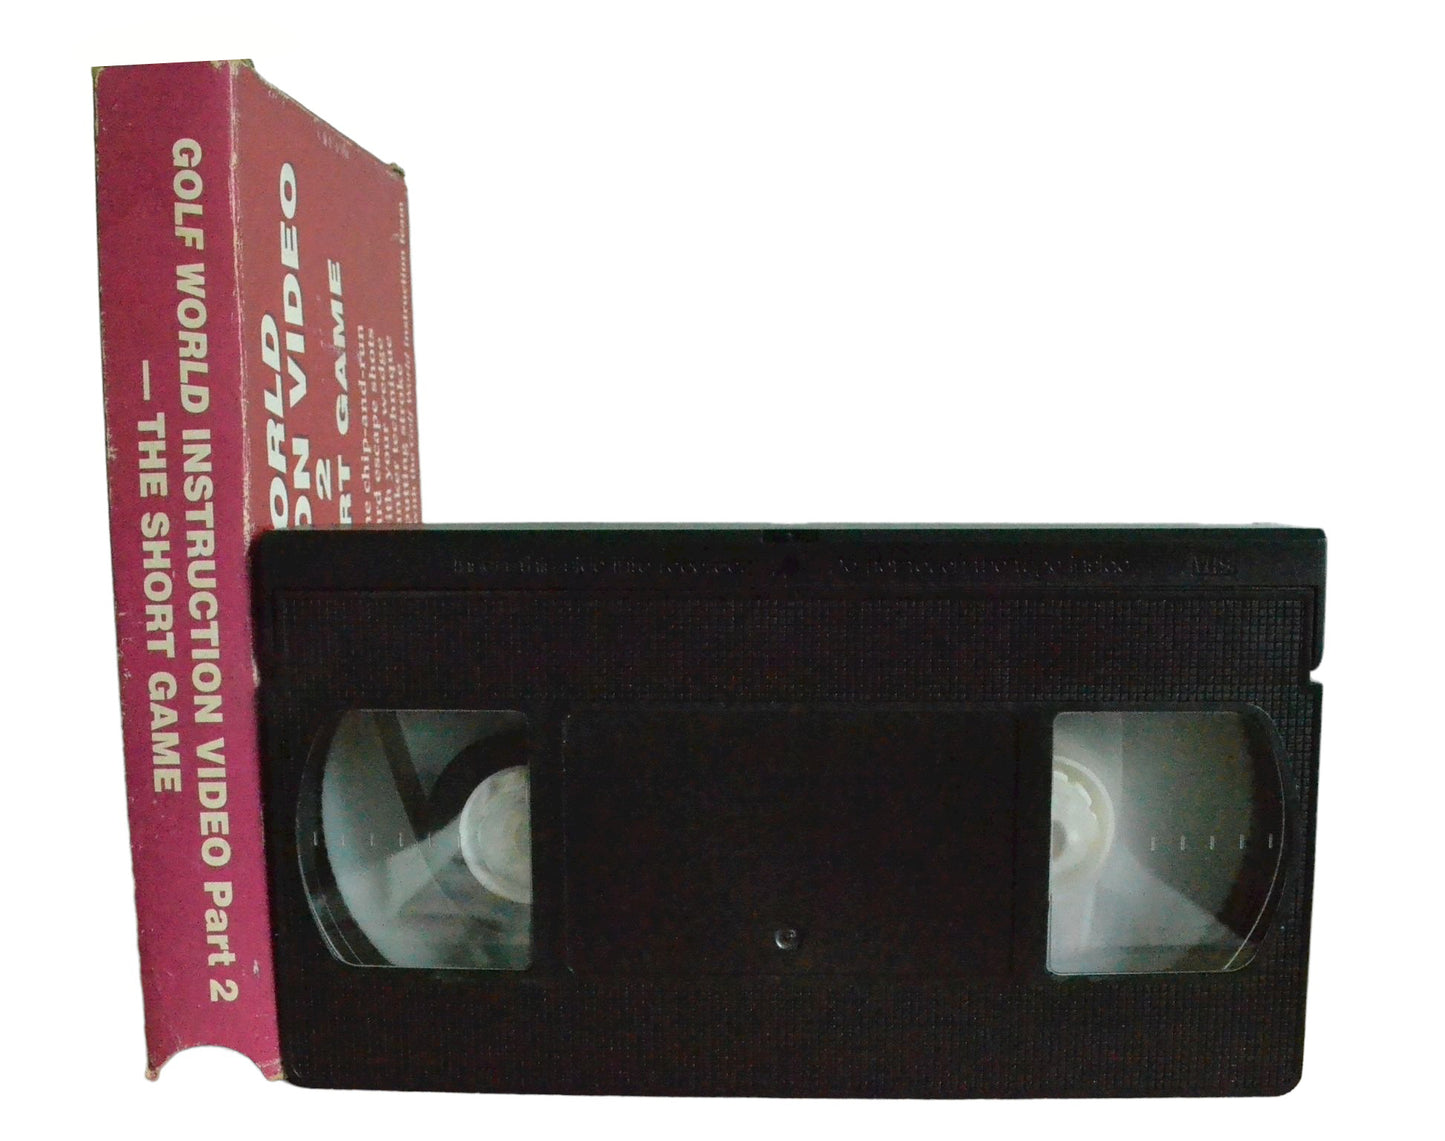 Golf World Instruction Video - Part 2 - The Short Game - Carton Box - Pal VHS-